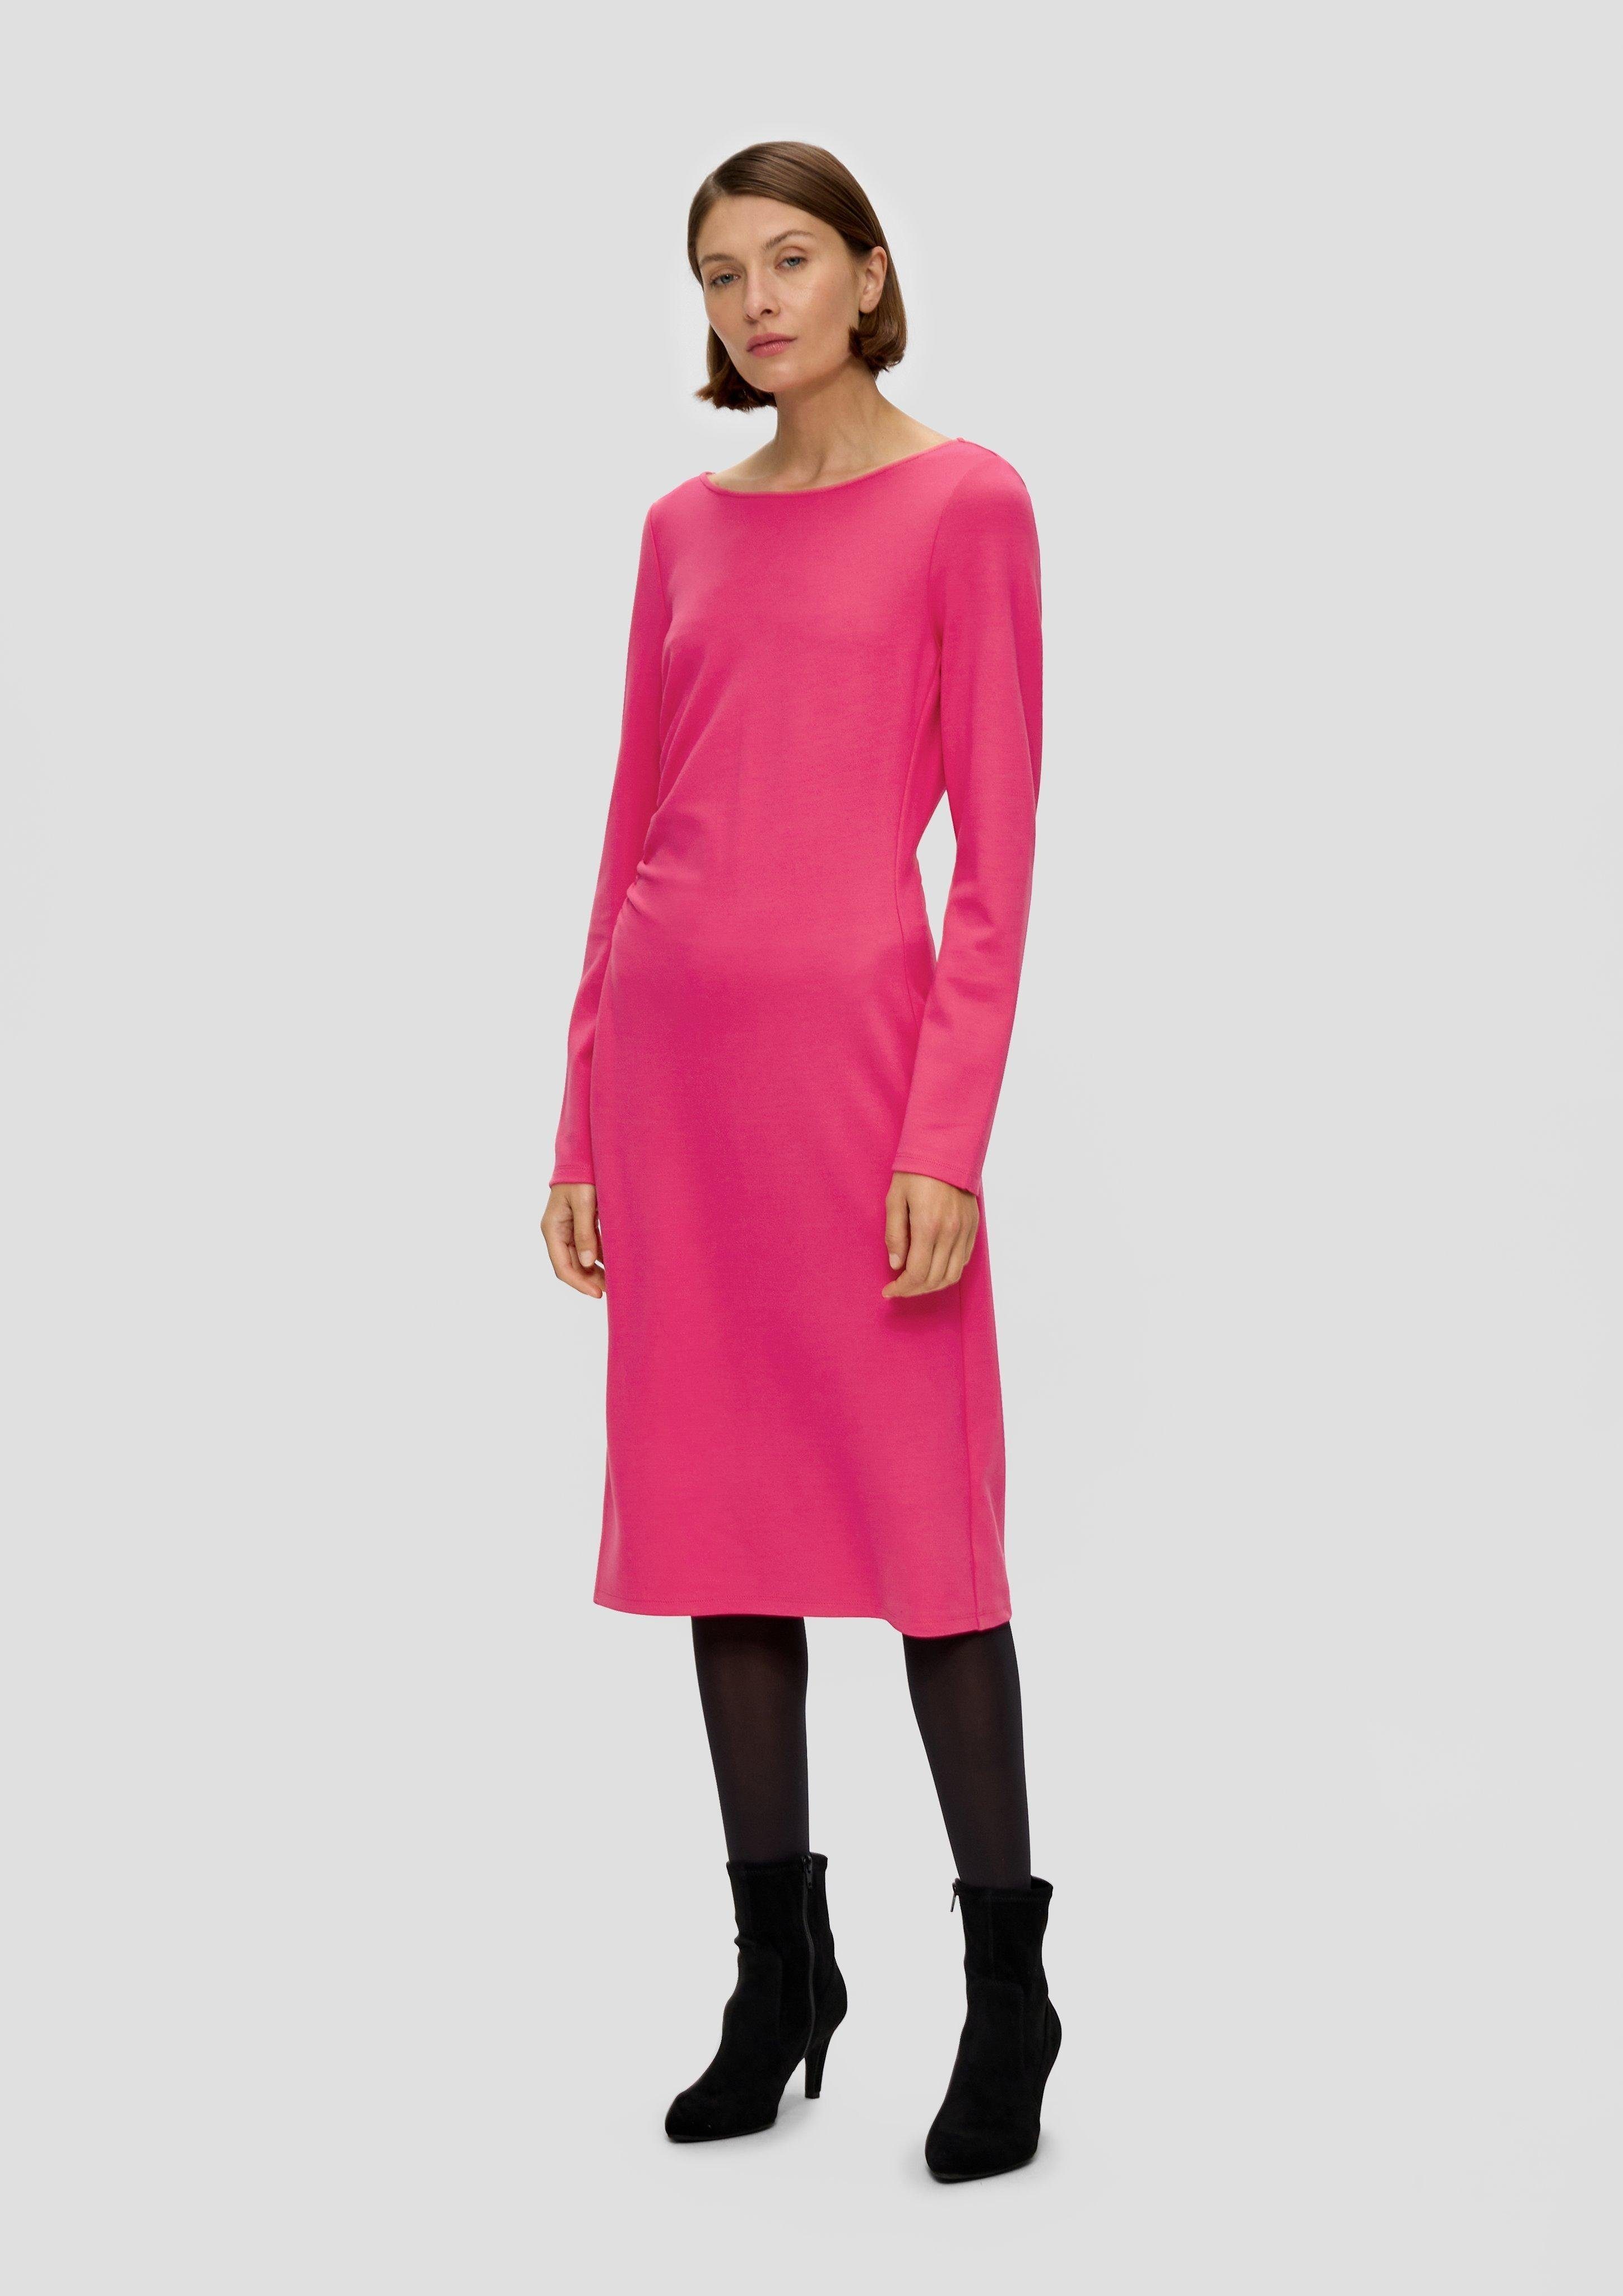 Viskosemix aus pink s.Oliver LABEL Raffung Minikleid Jerseykleid BLACK